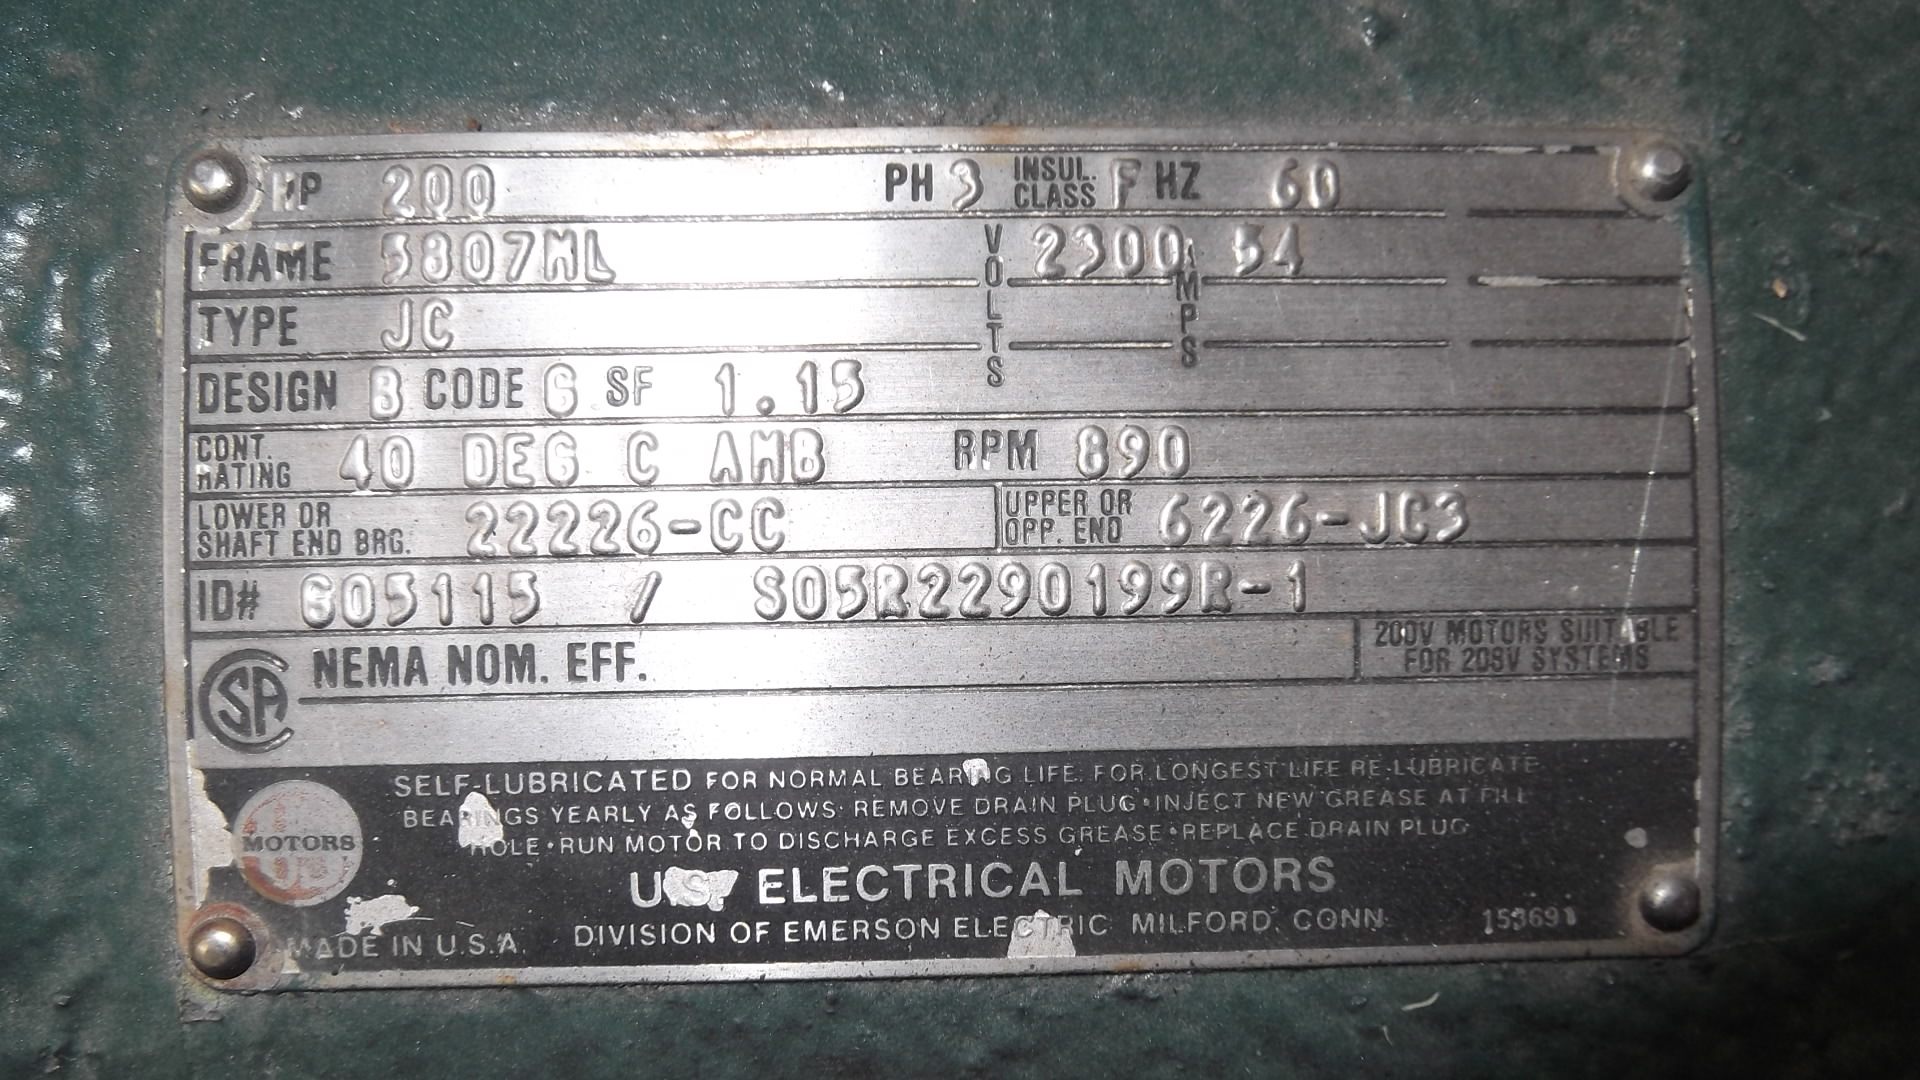 US Electric 200 HP 900 RPM 5807ML Squirrel Cage Motors 69900